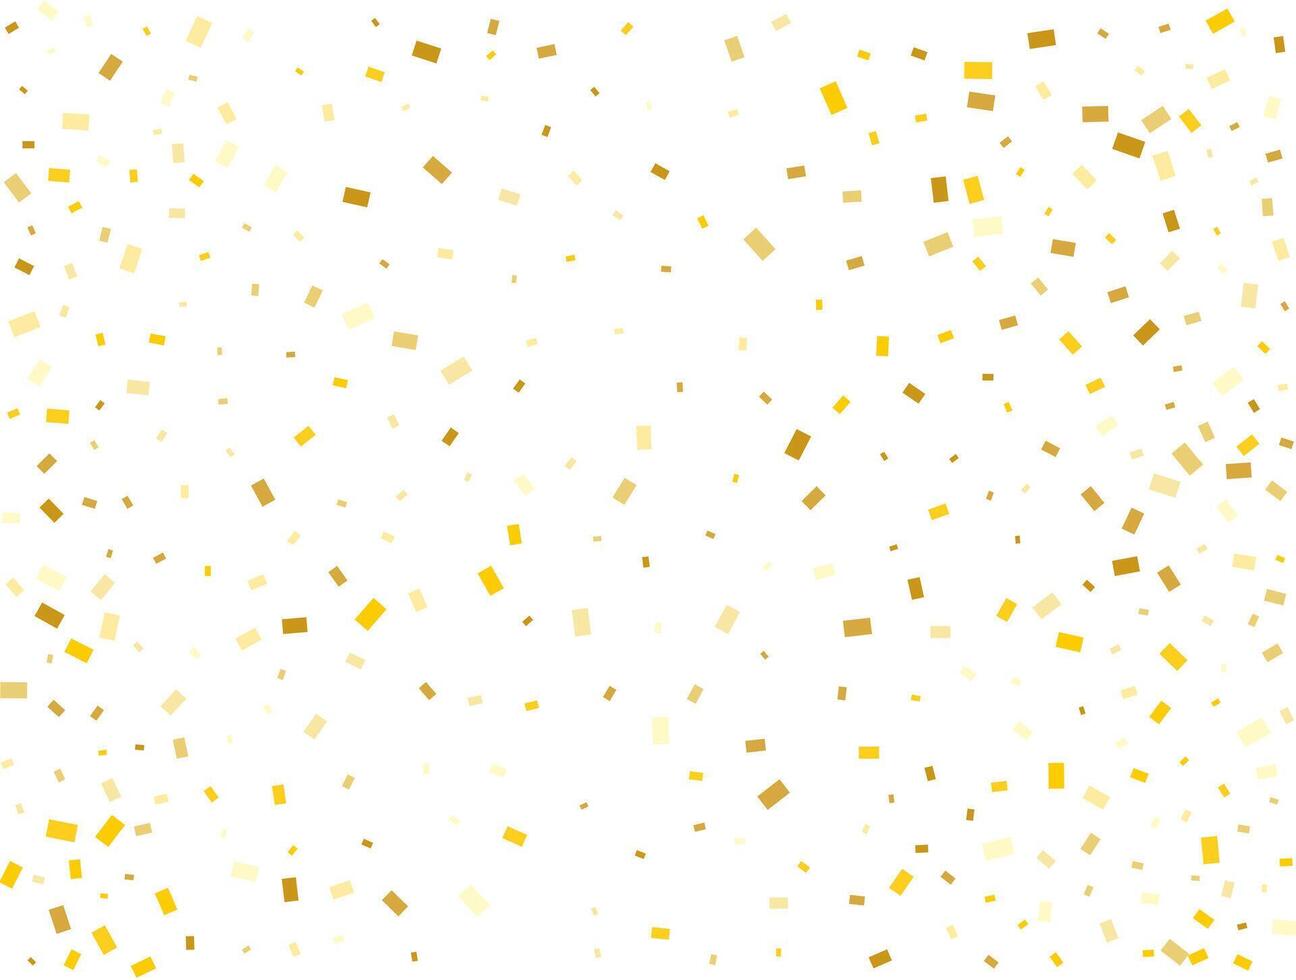 jul gyllene rektanglar konfetti bakgrund. vektor illustration